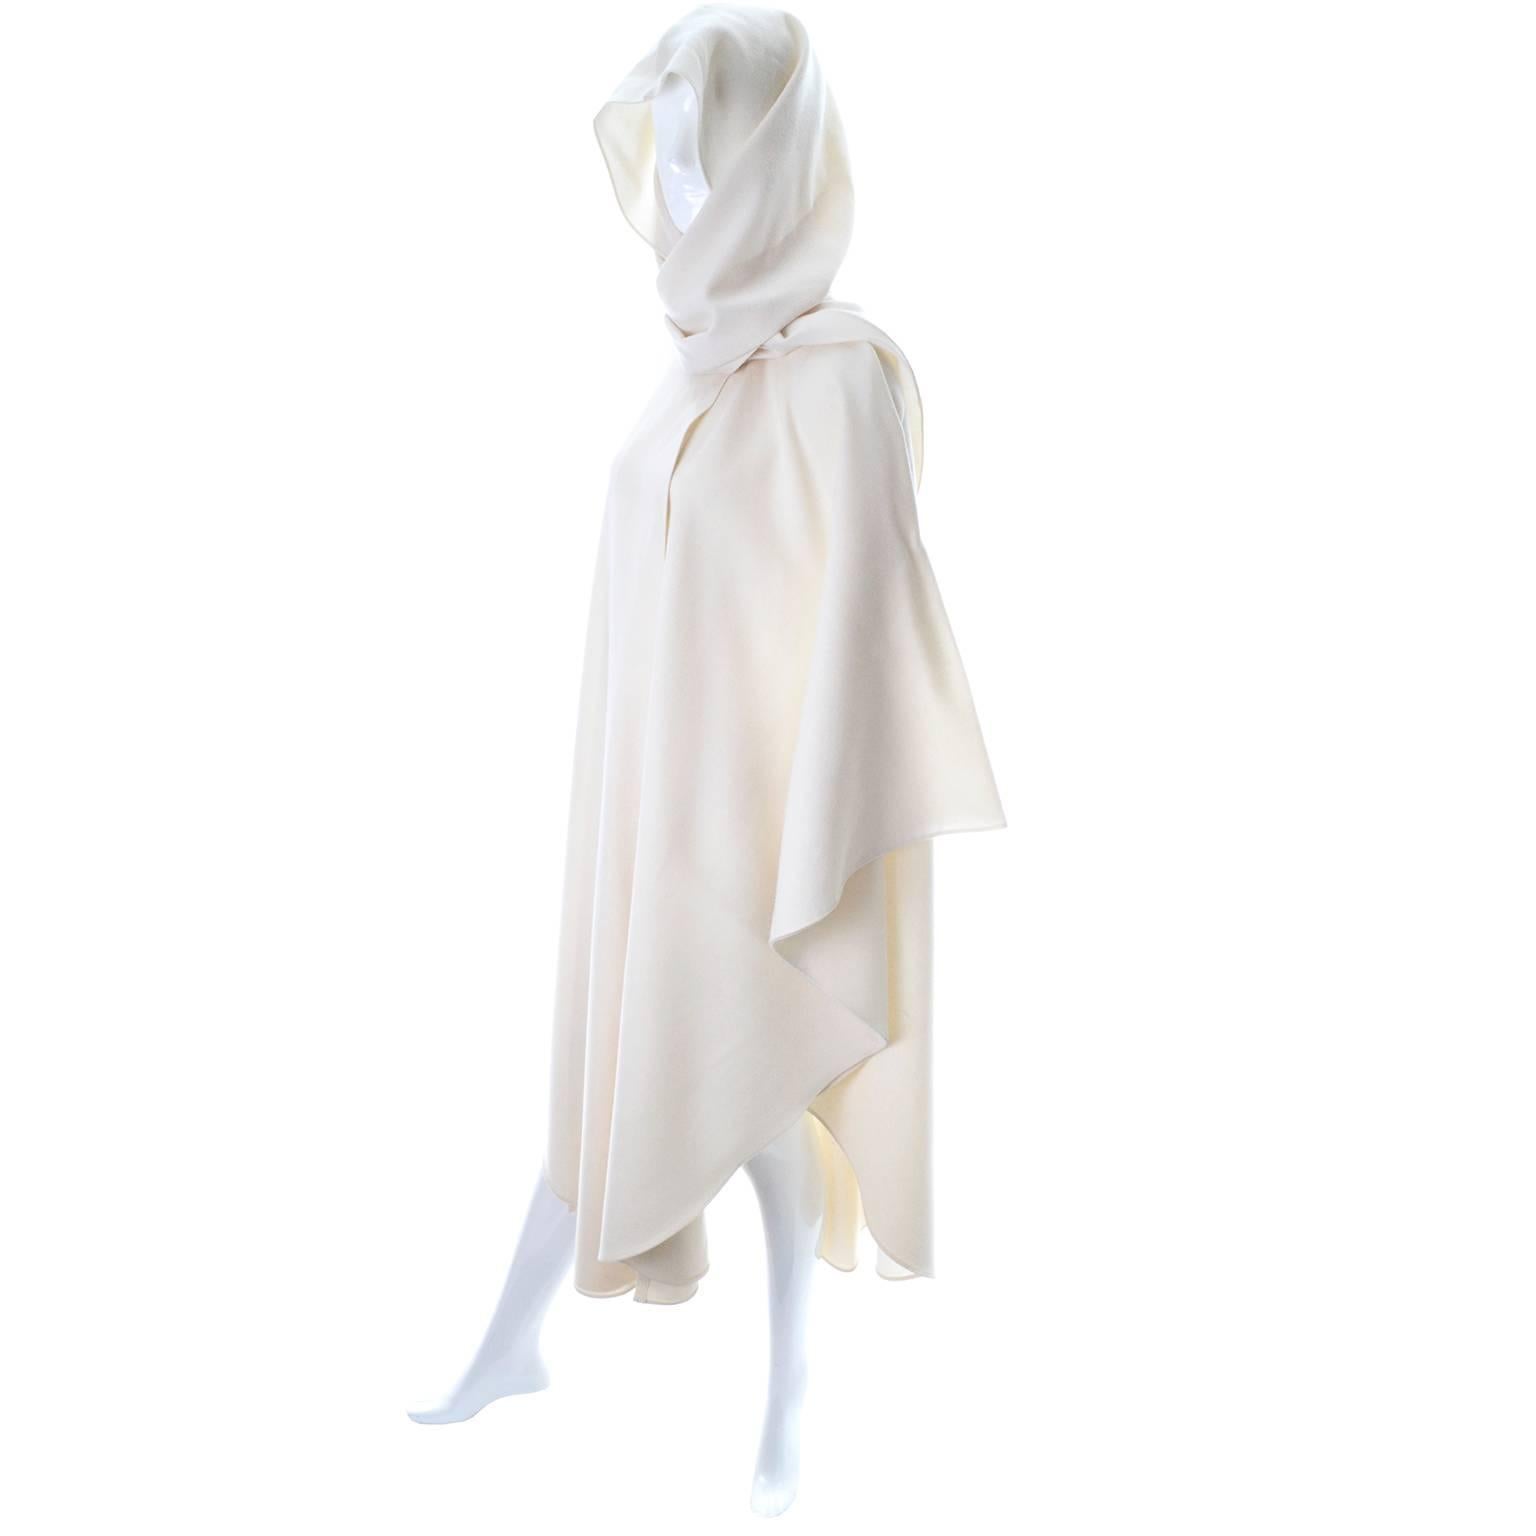 wool hooded cloak